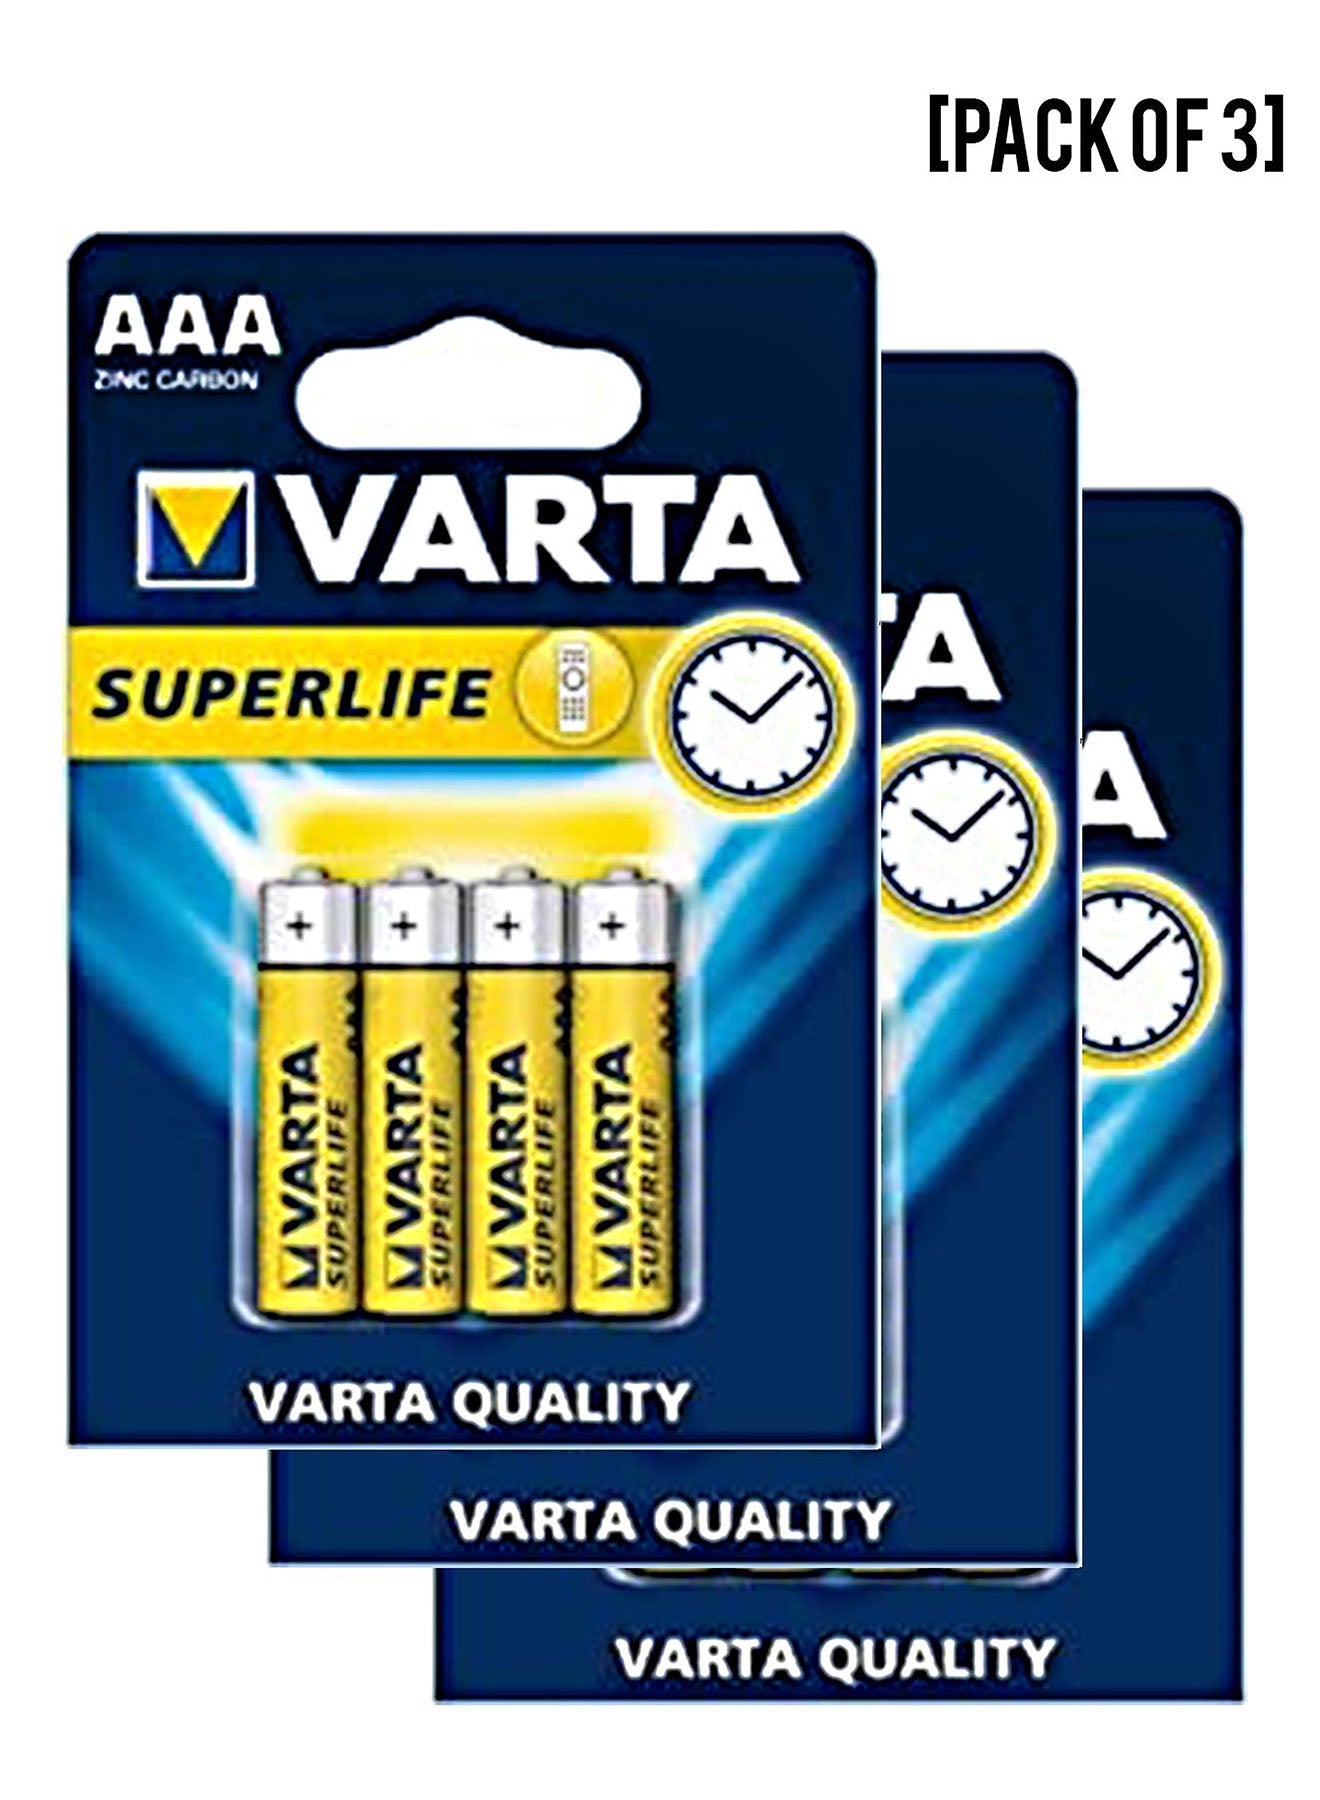 Varta Superlife AAA Battery 4 Units Value Pack of 3 